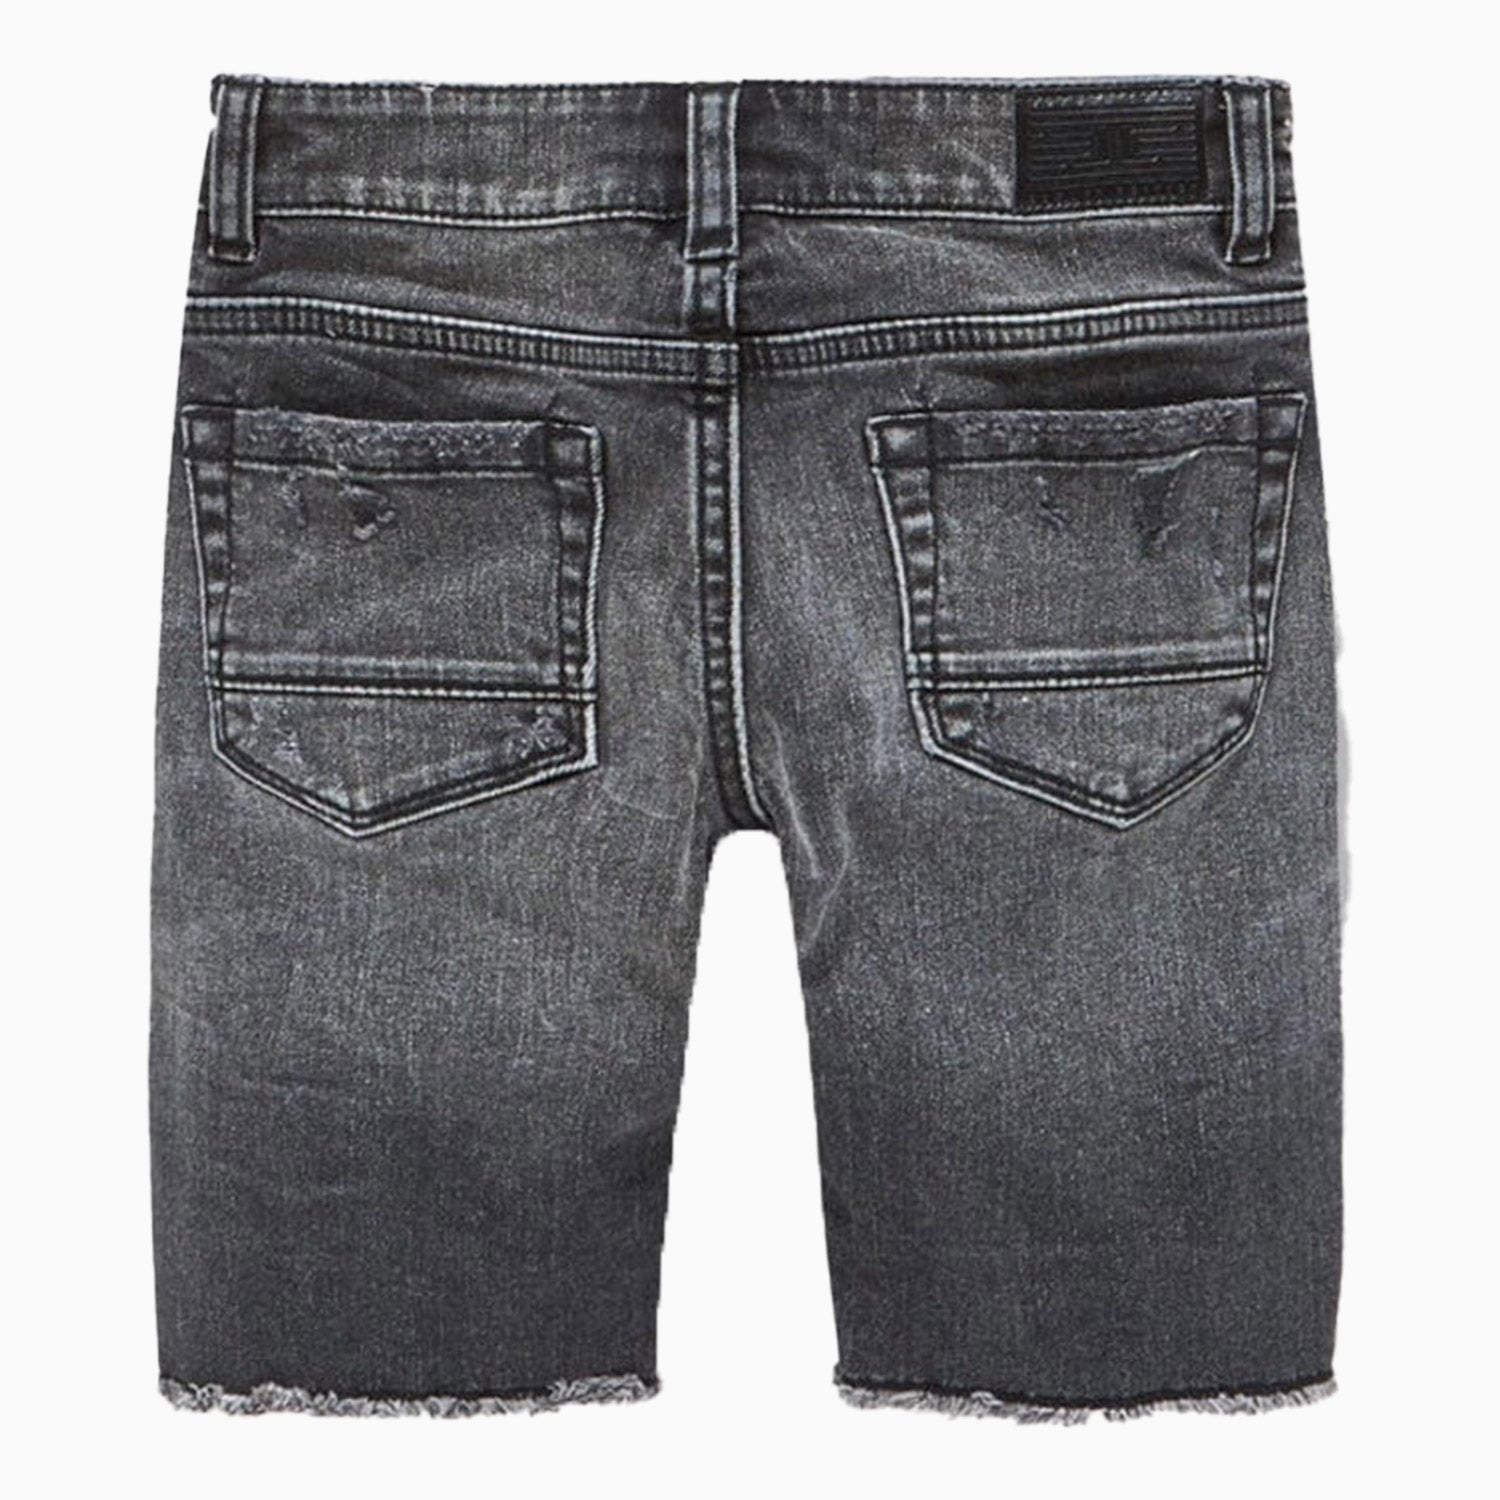 jordan-craig-kids-shredded-jean-shorts-j3185sb-bs